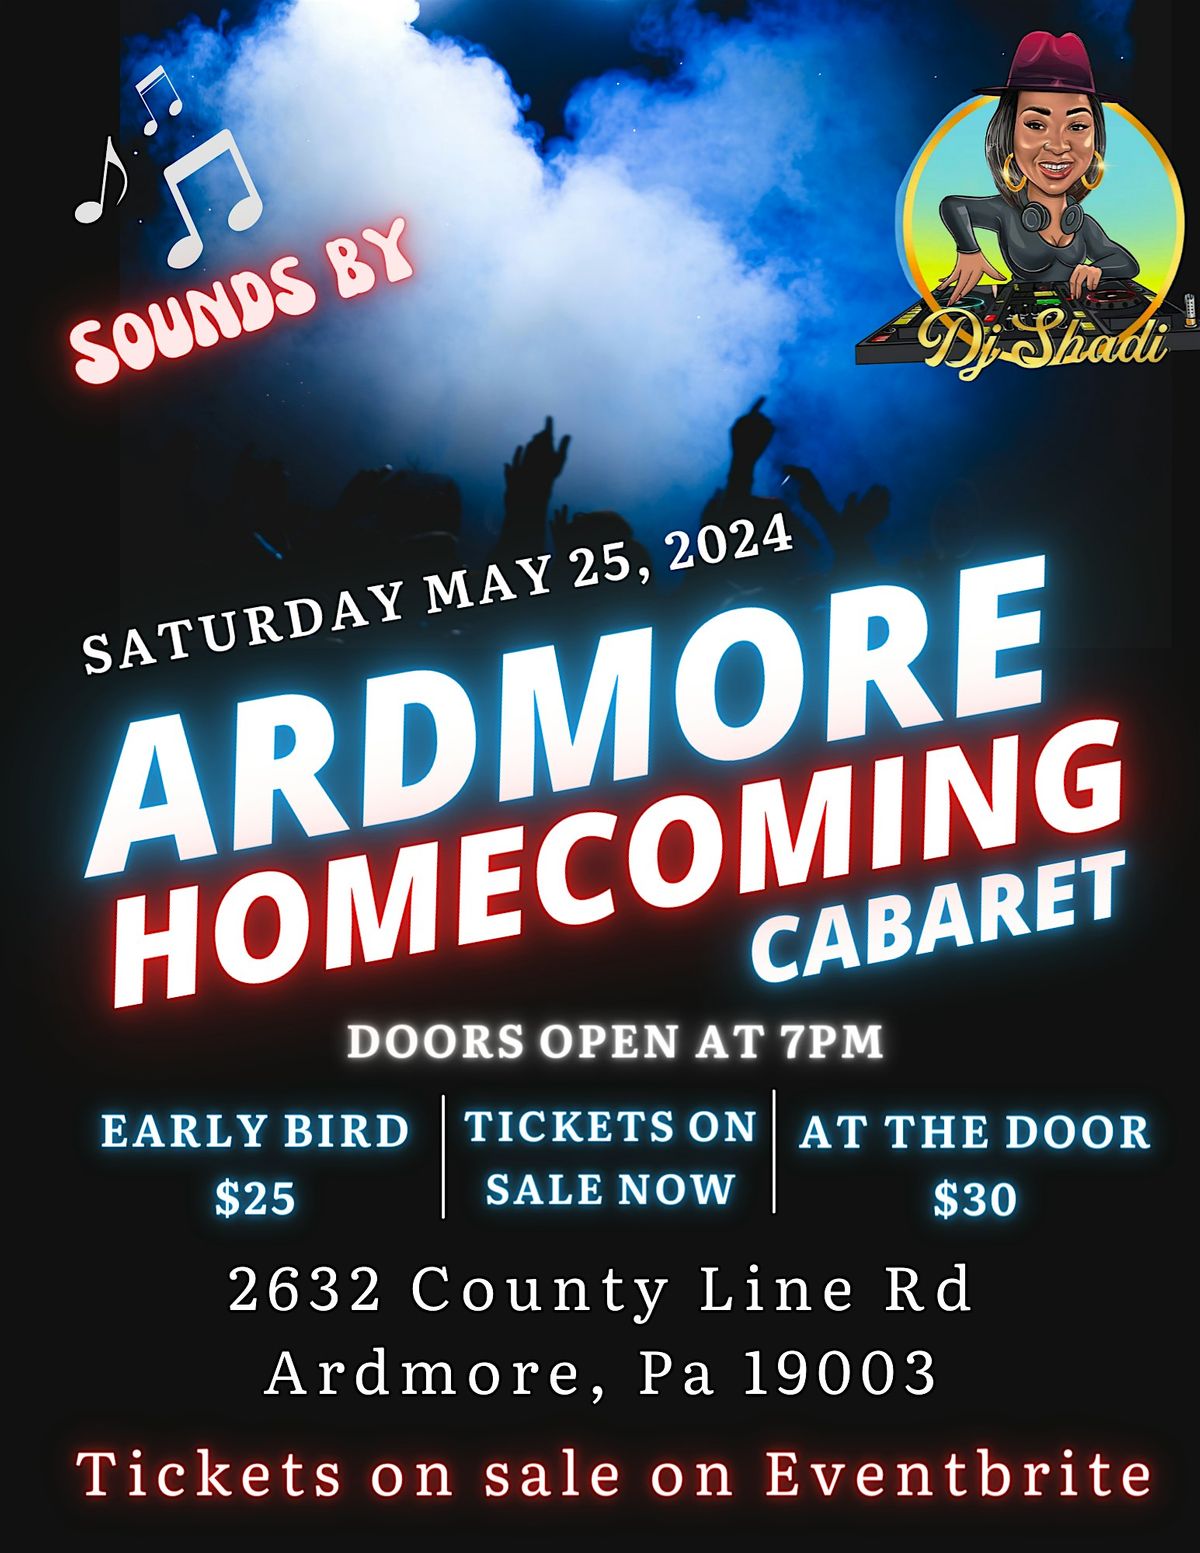 Ardmore Homecoming Cabaret